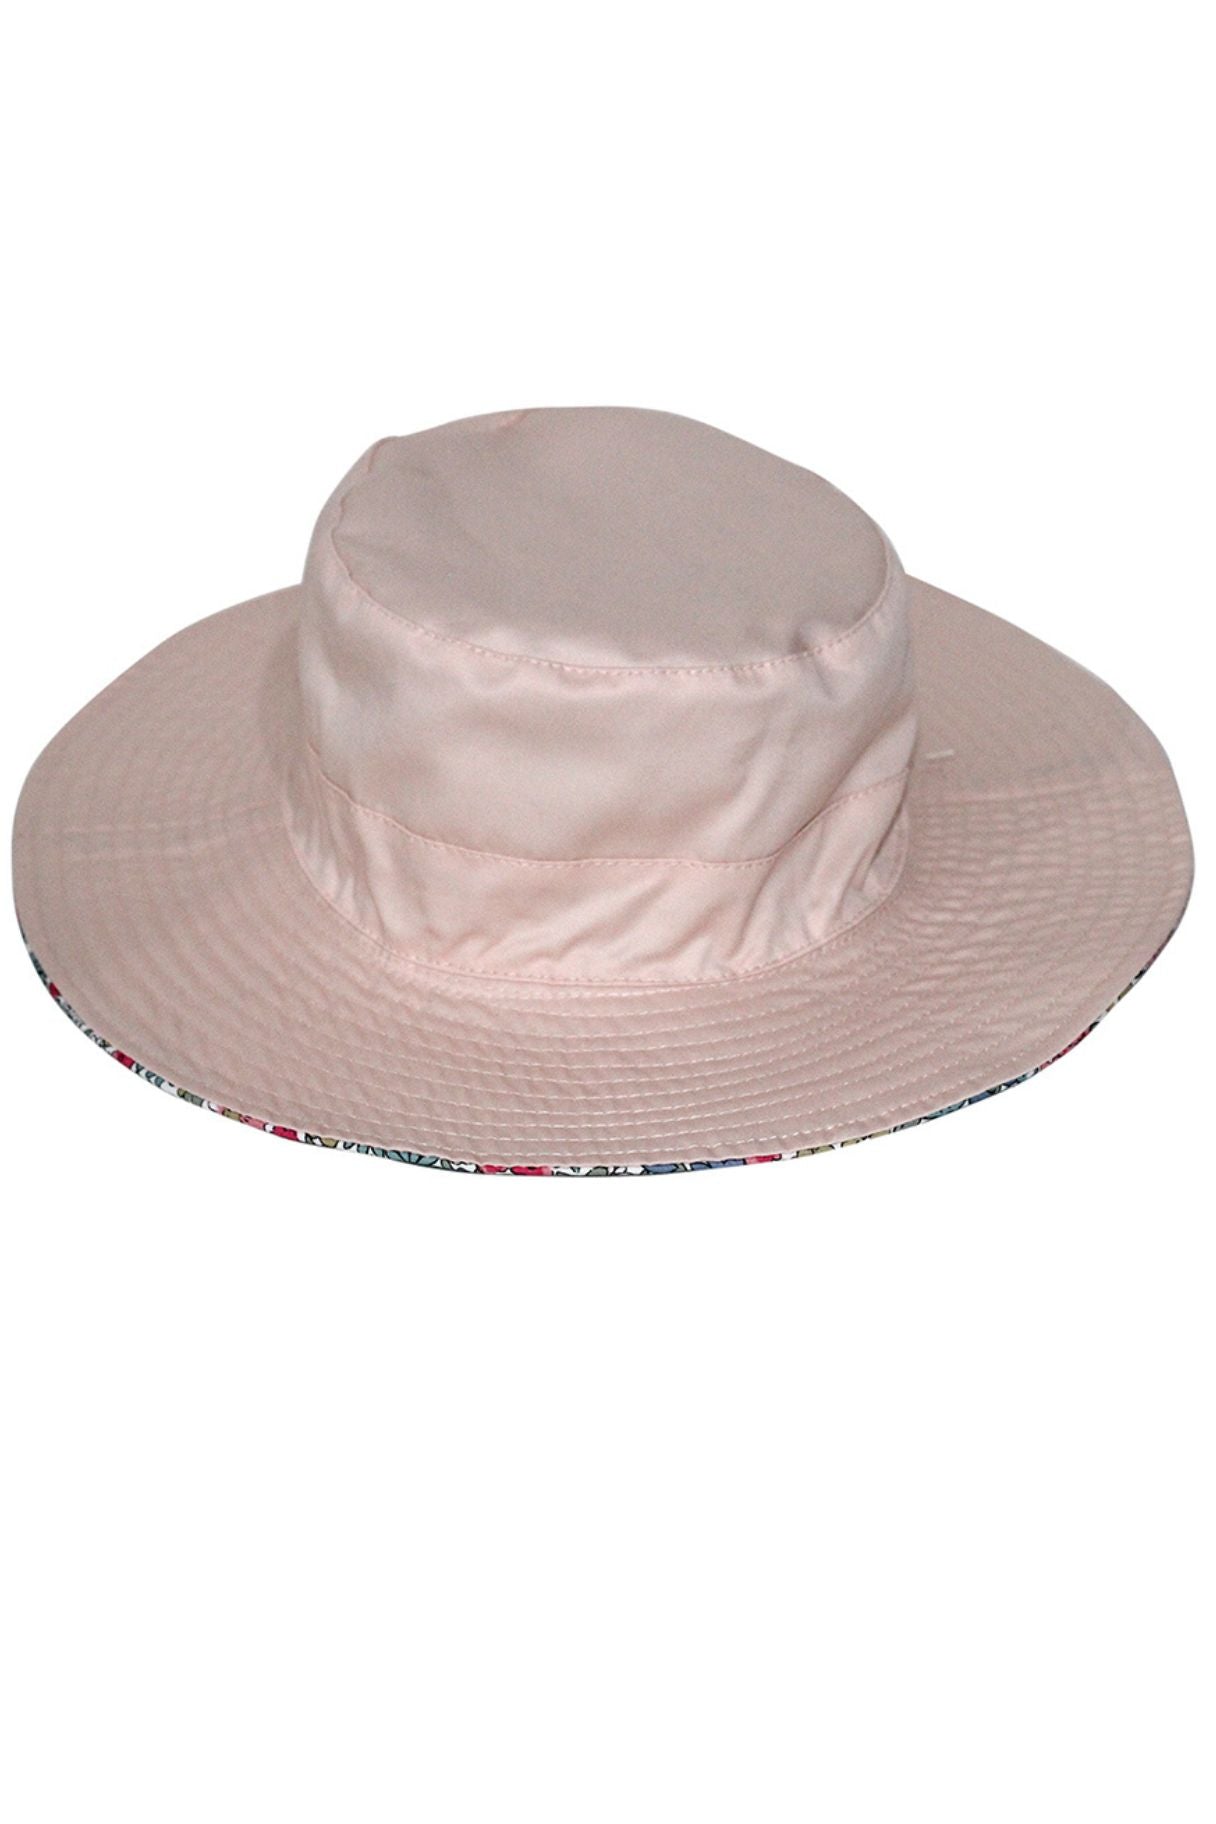 Finley Reversible Beach Hat